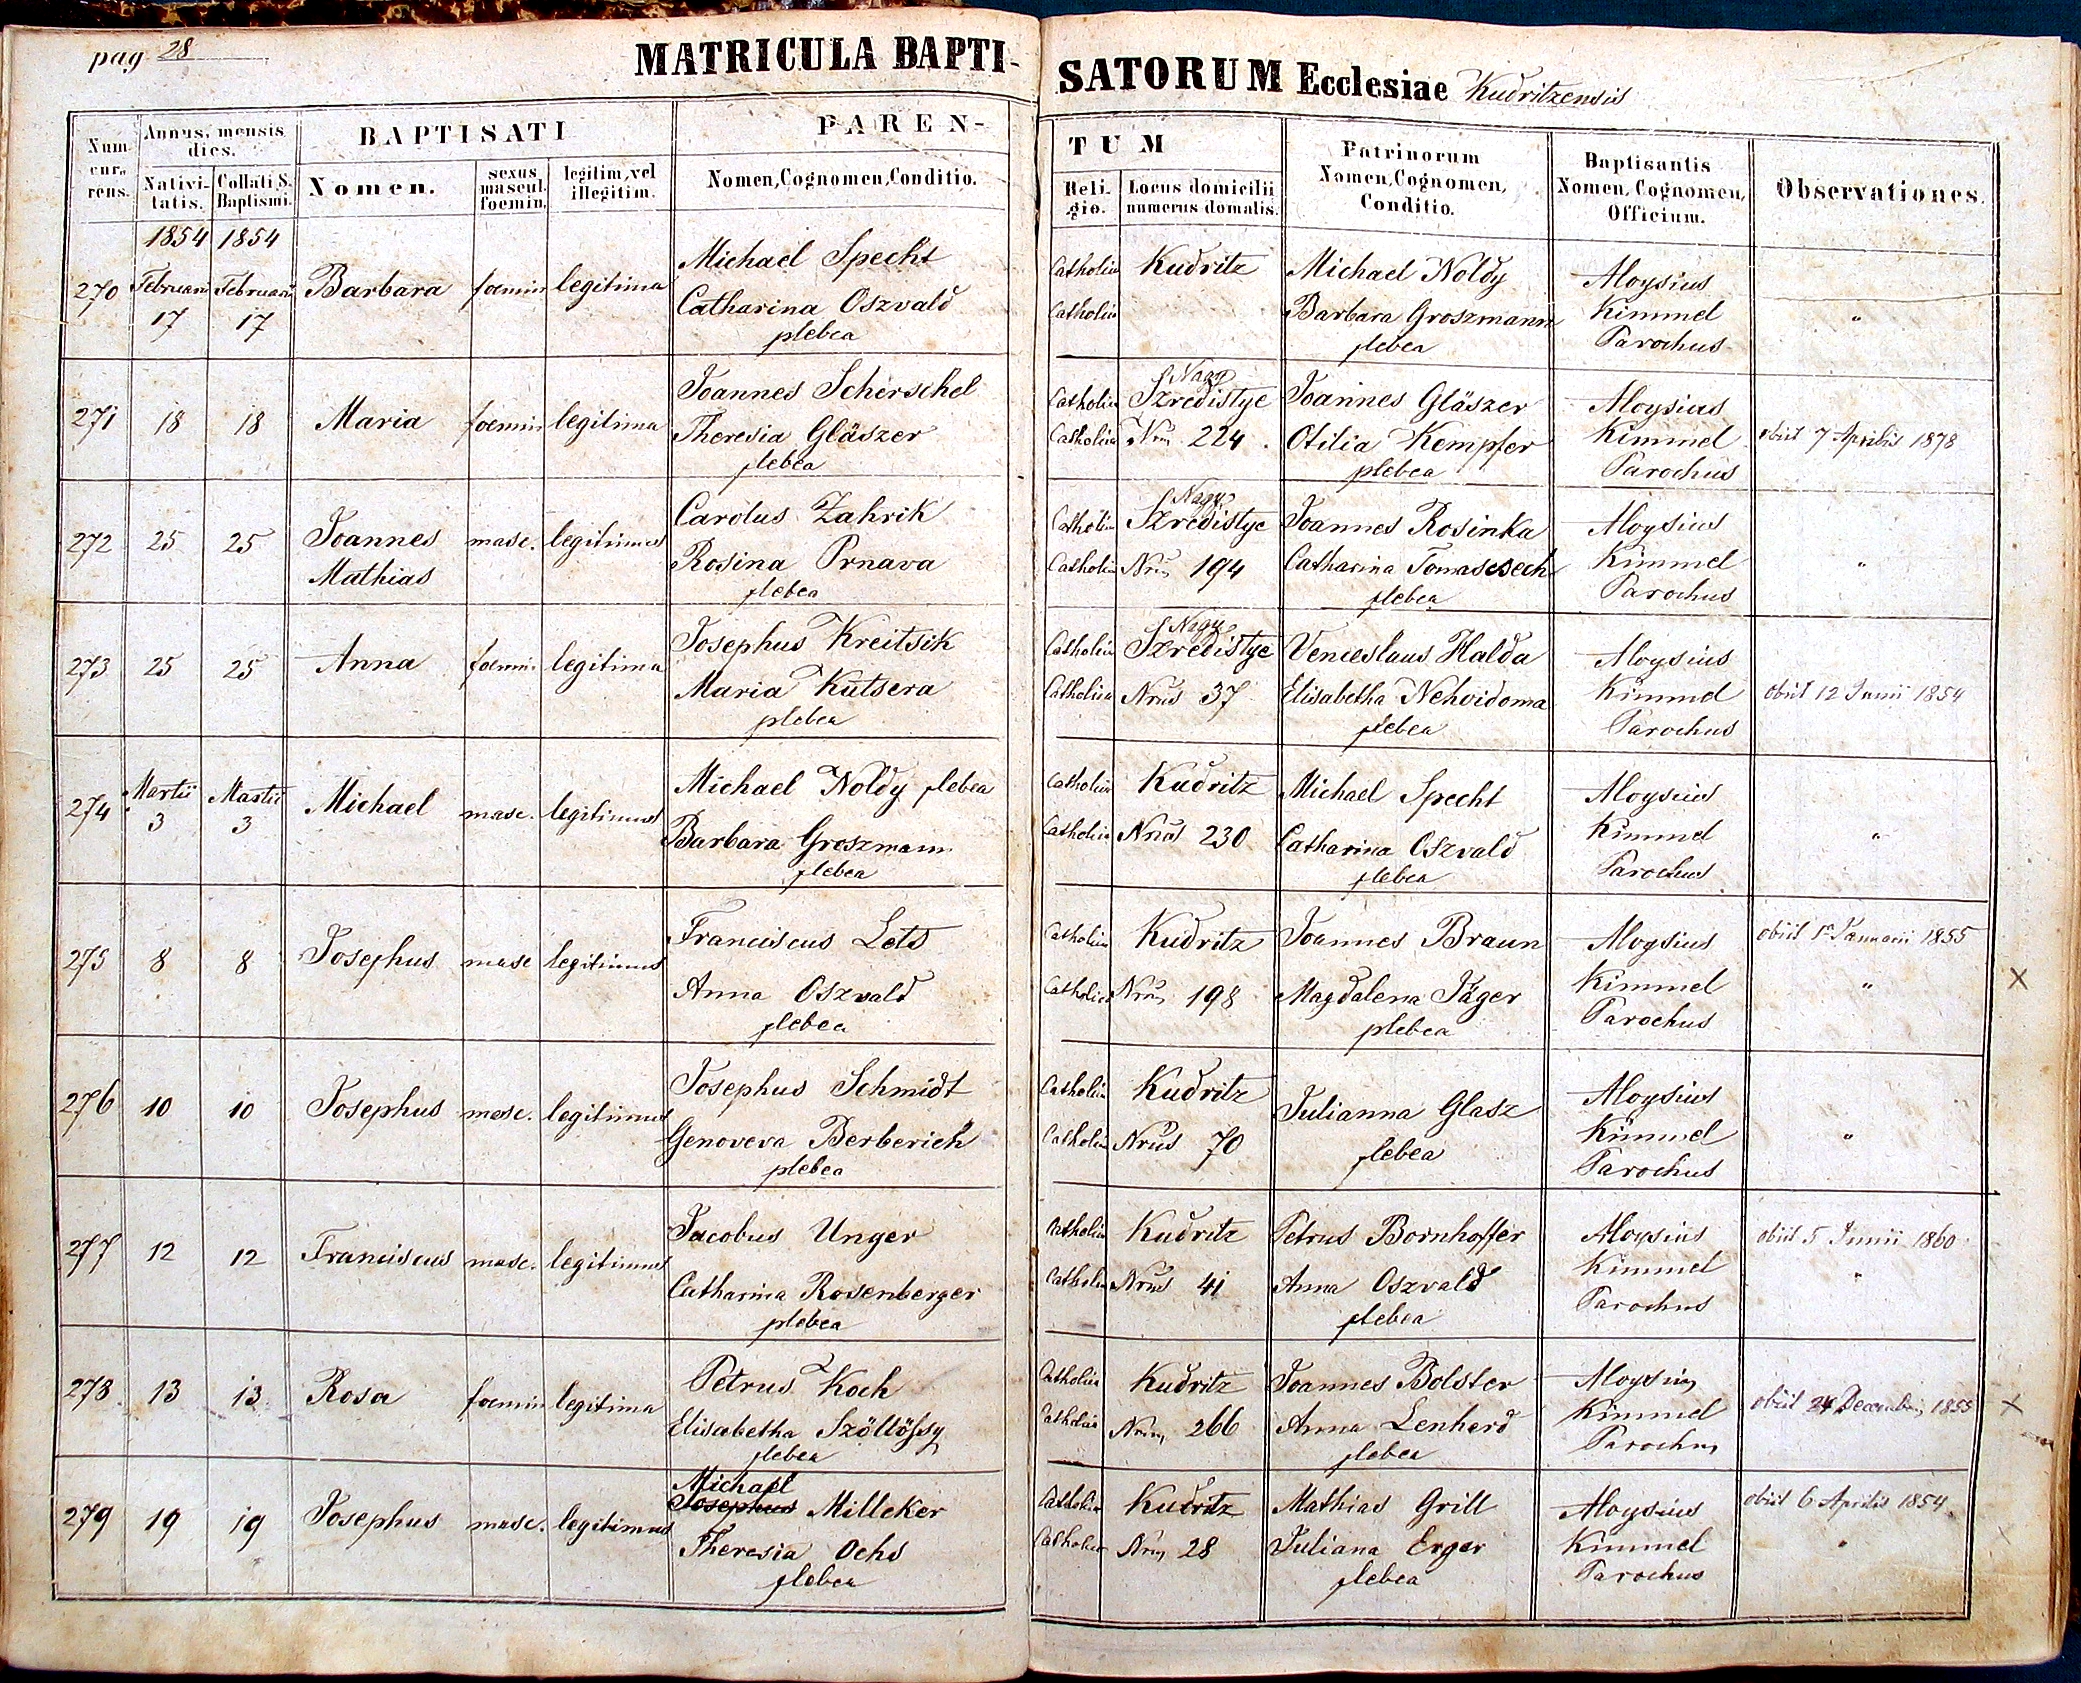 images/church_records/BIRTHS/1852-1870B/028